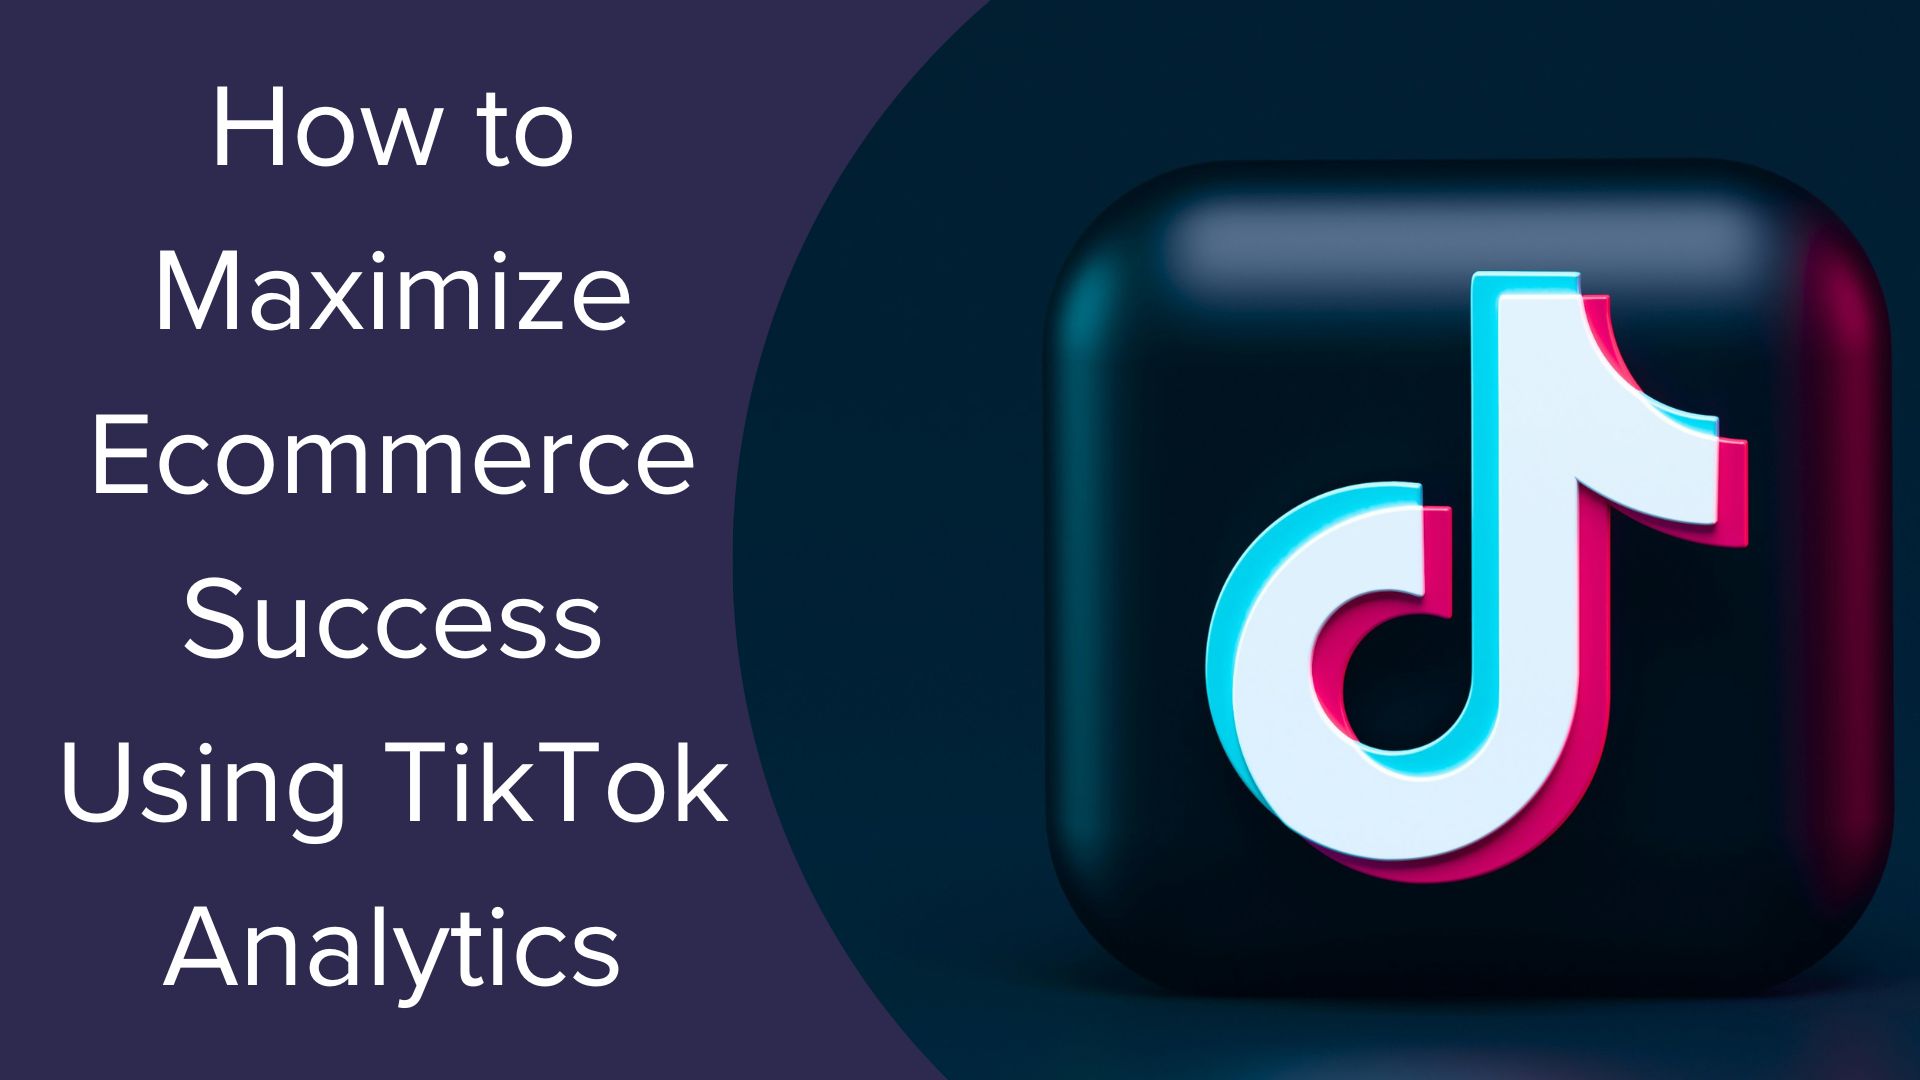 How to Maximize Ecommerce Success Using TikTok Analytics